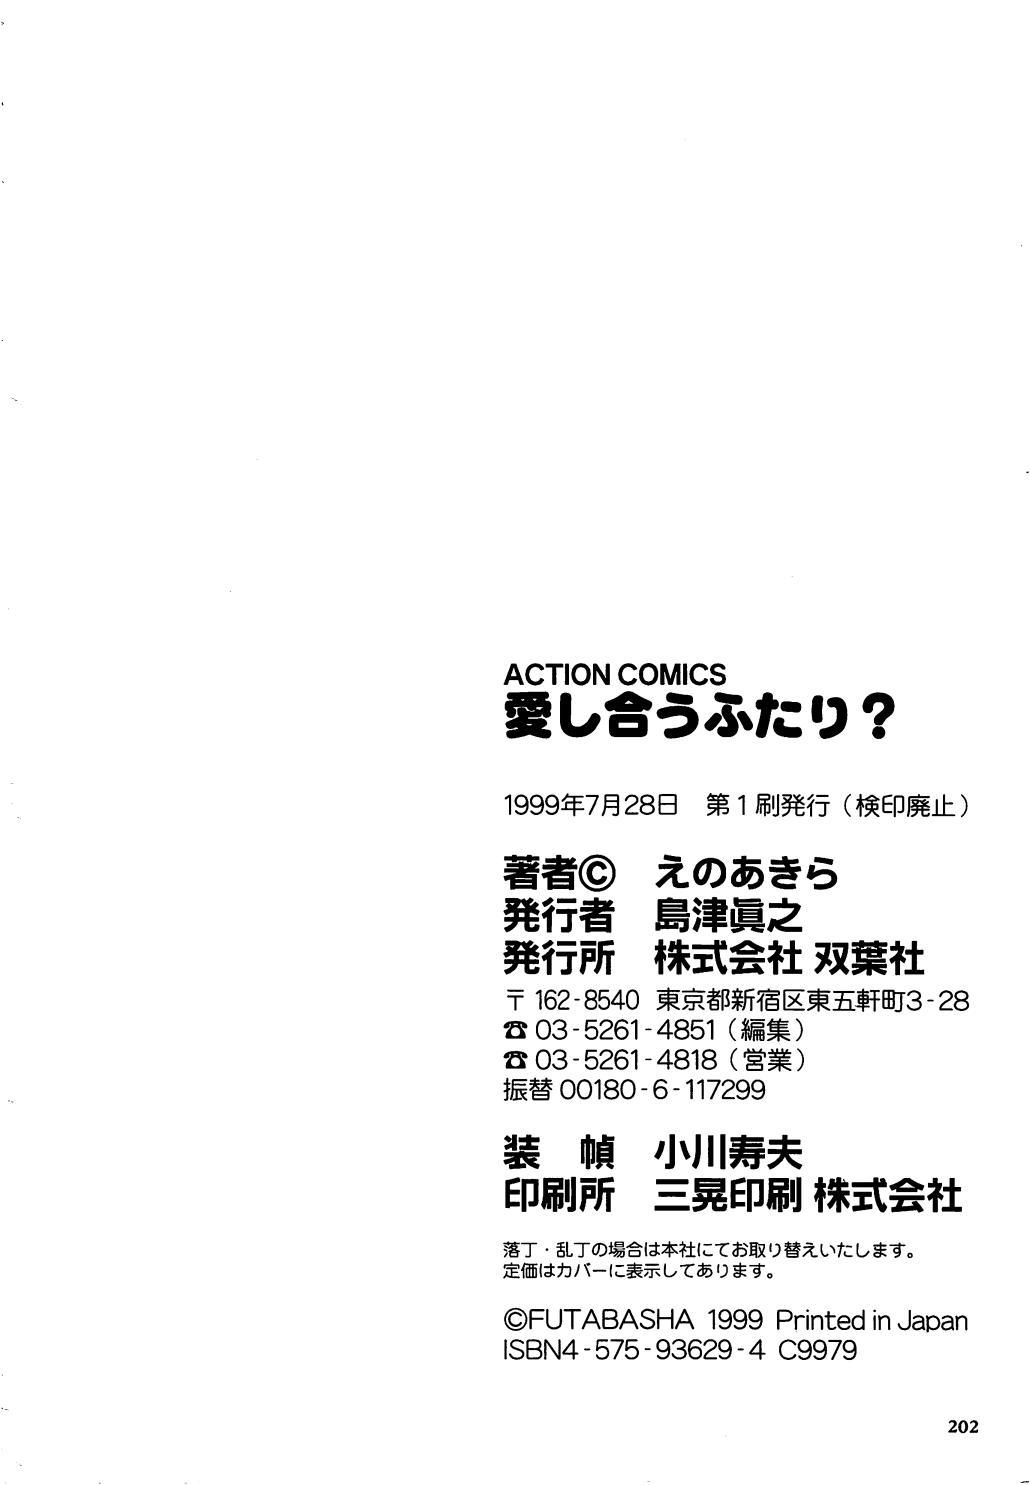 Tattoo Aishiau Futari? Punished - Page 202